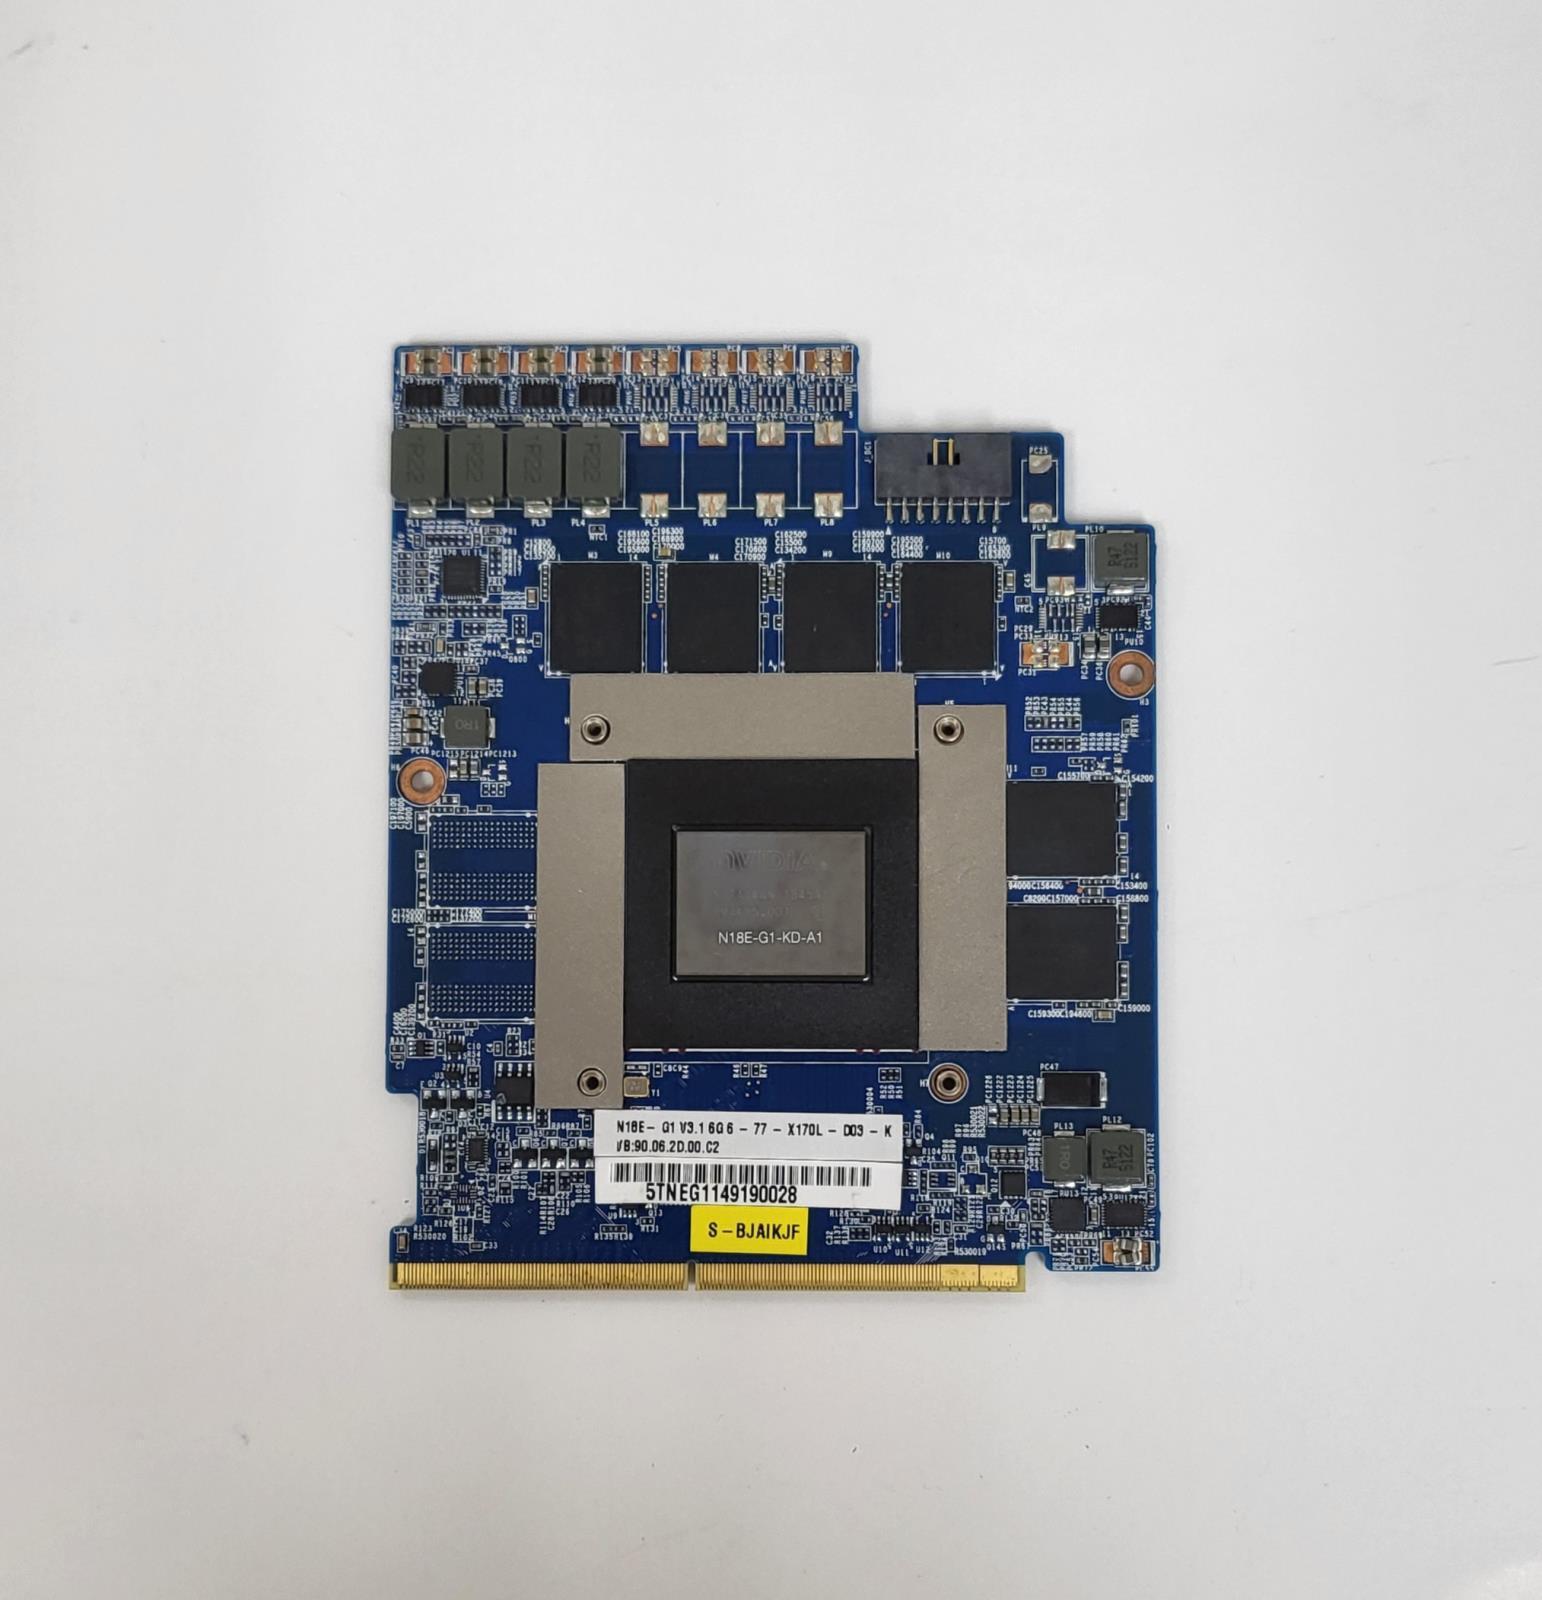 NVIDIA RTX 2060 N18E-G1-KD-A1 GPU Upgrade Kit